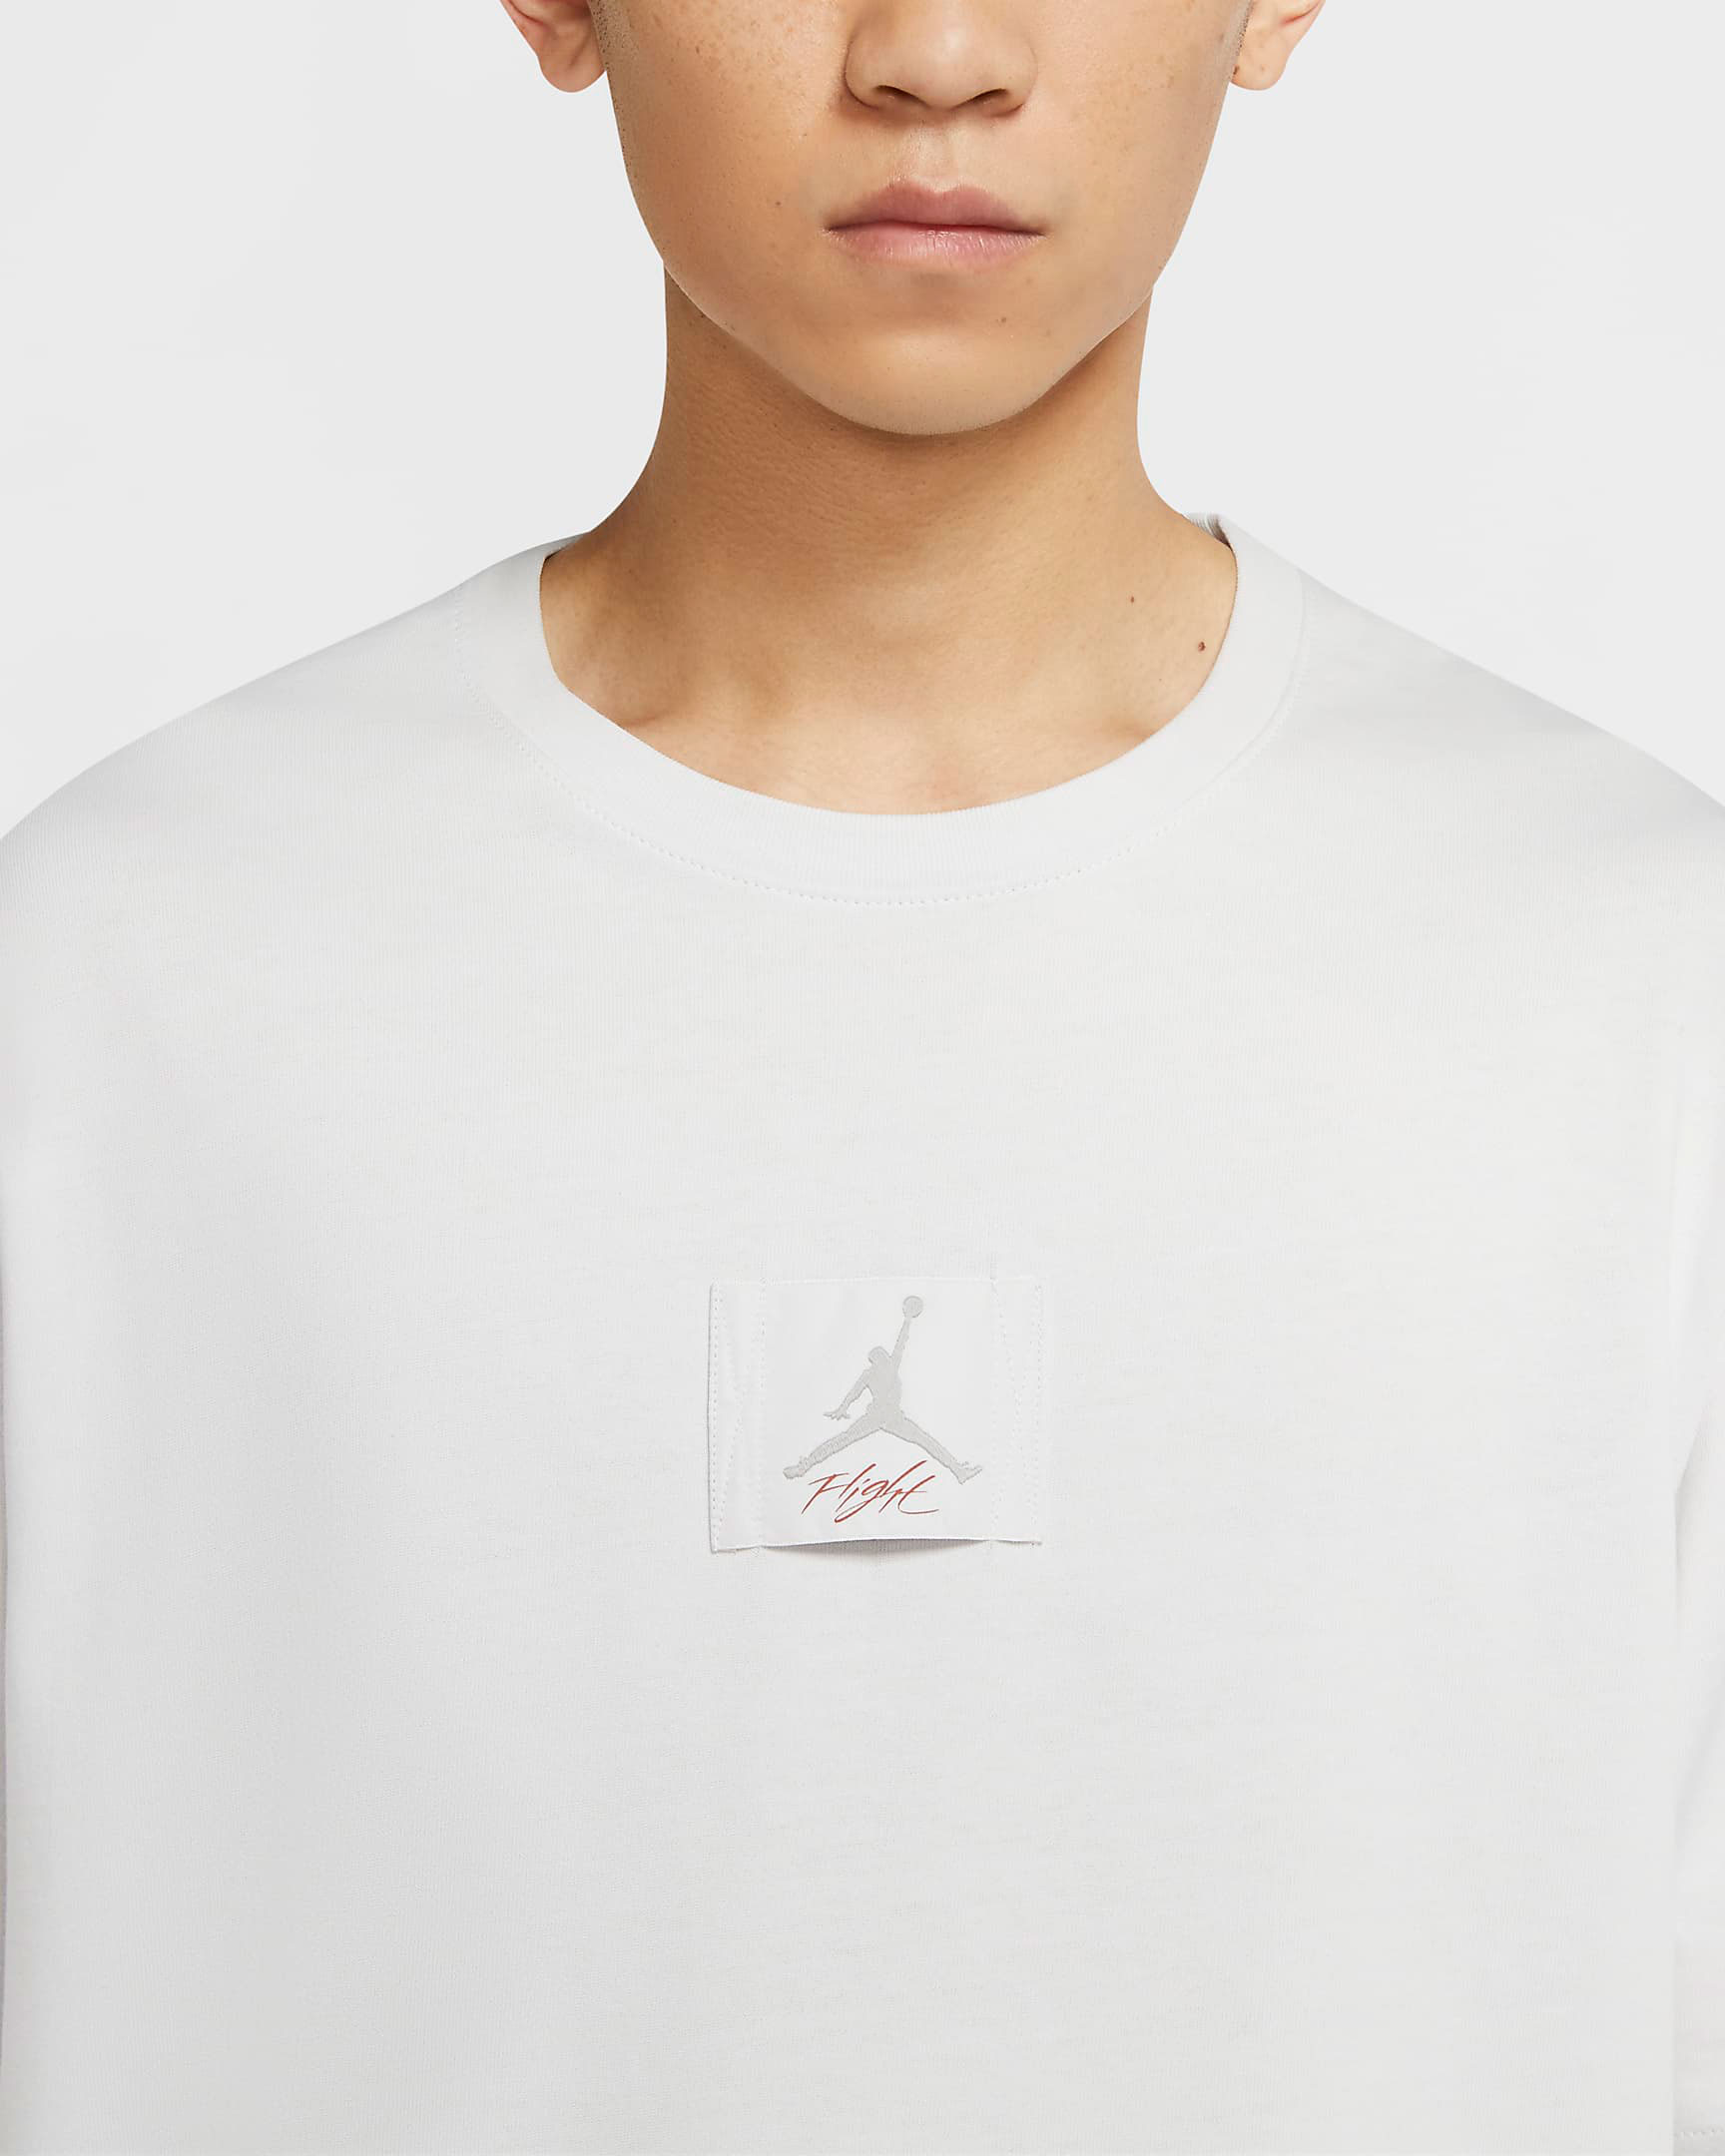 jordan-nike-flight-shirt-platinum-tint-2